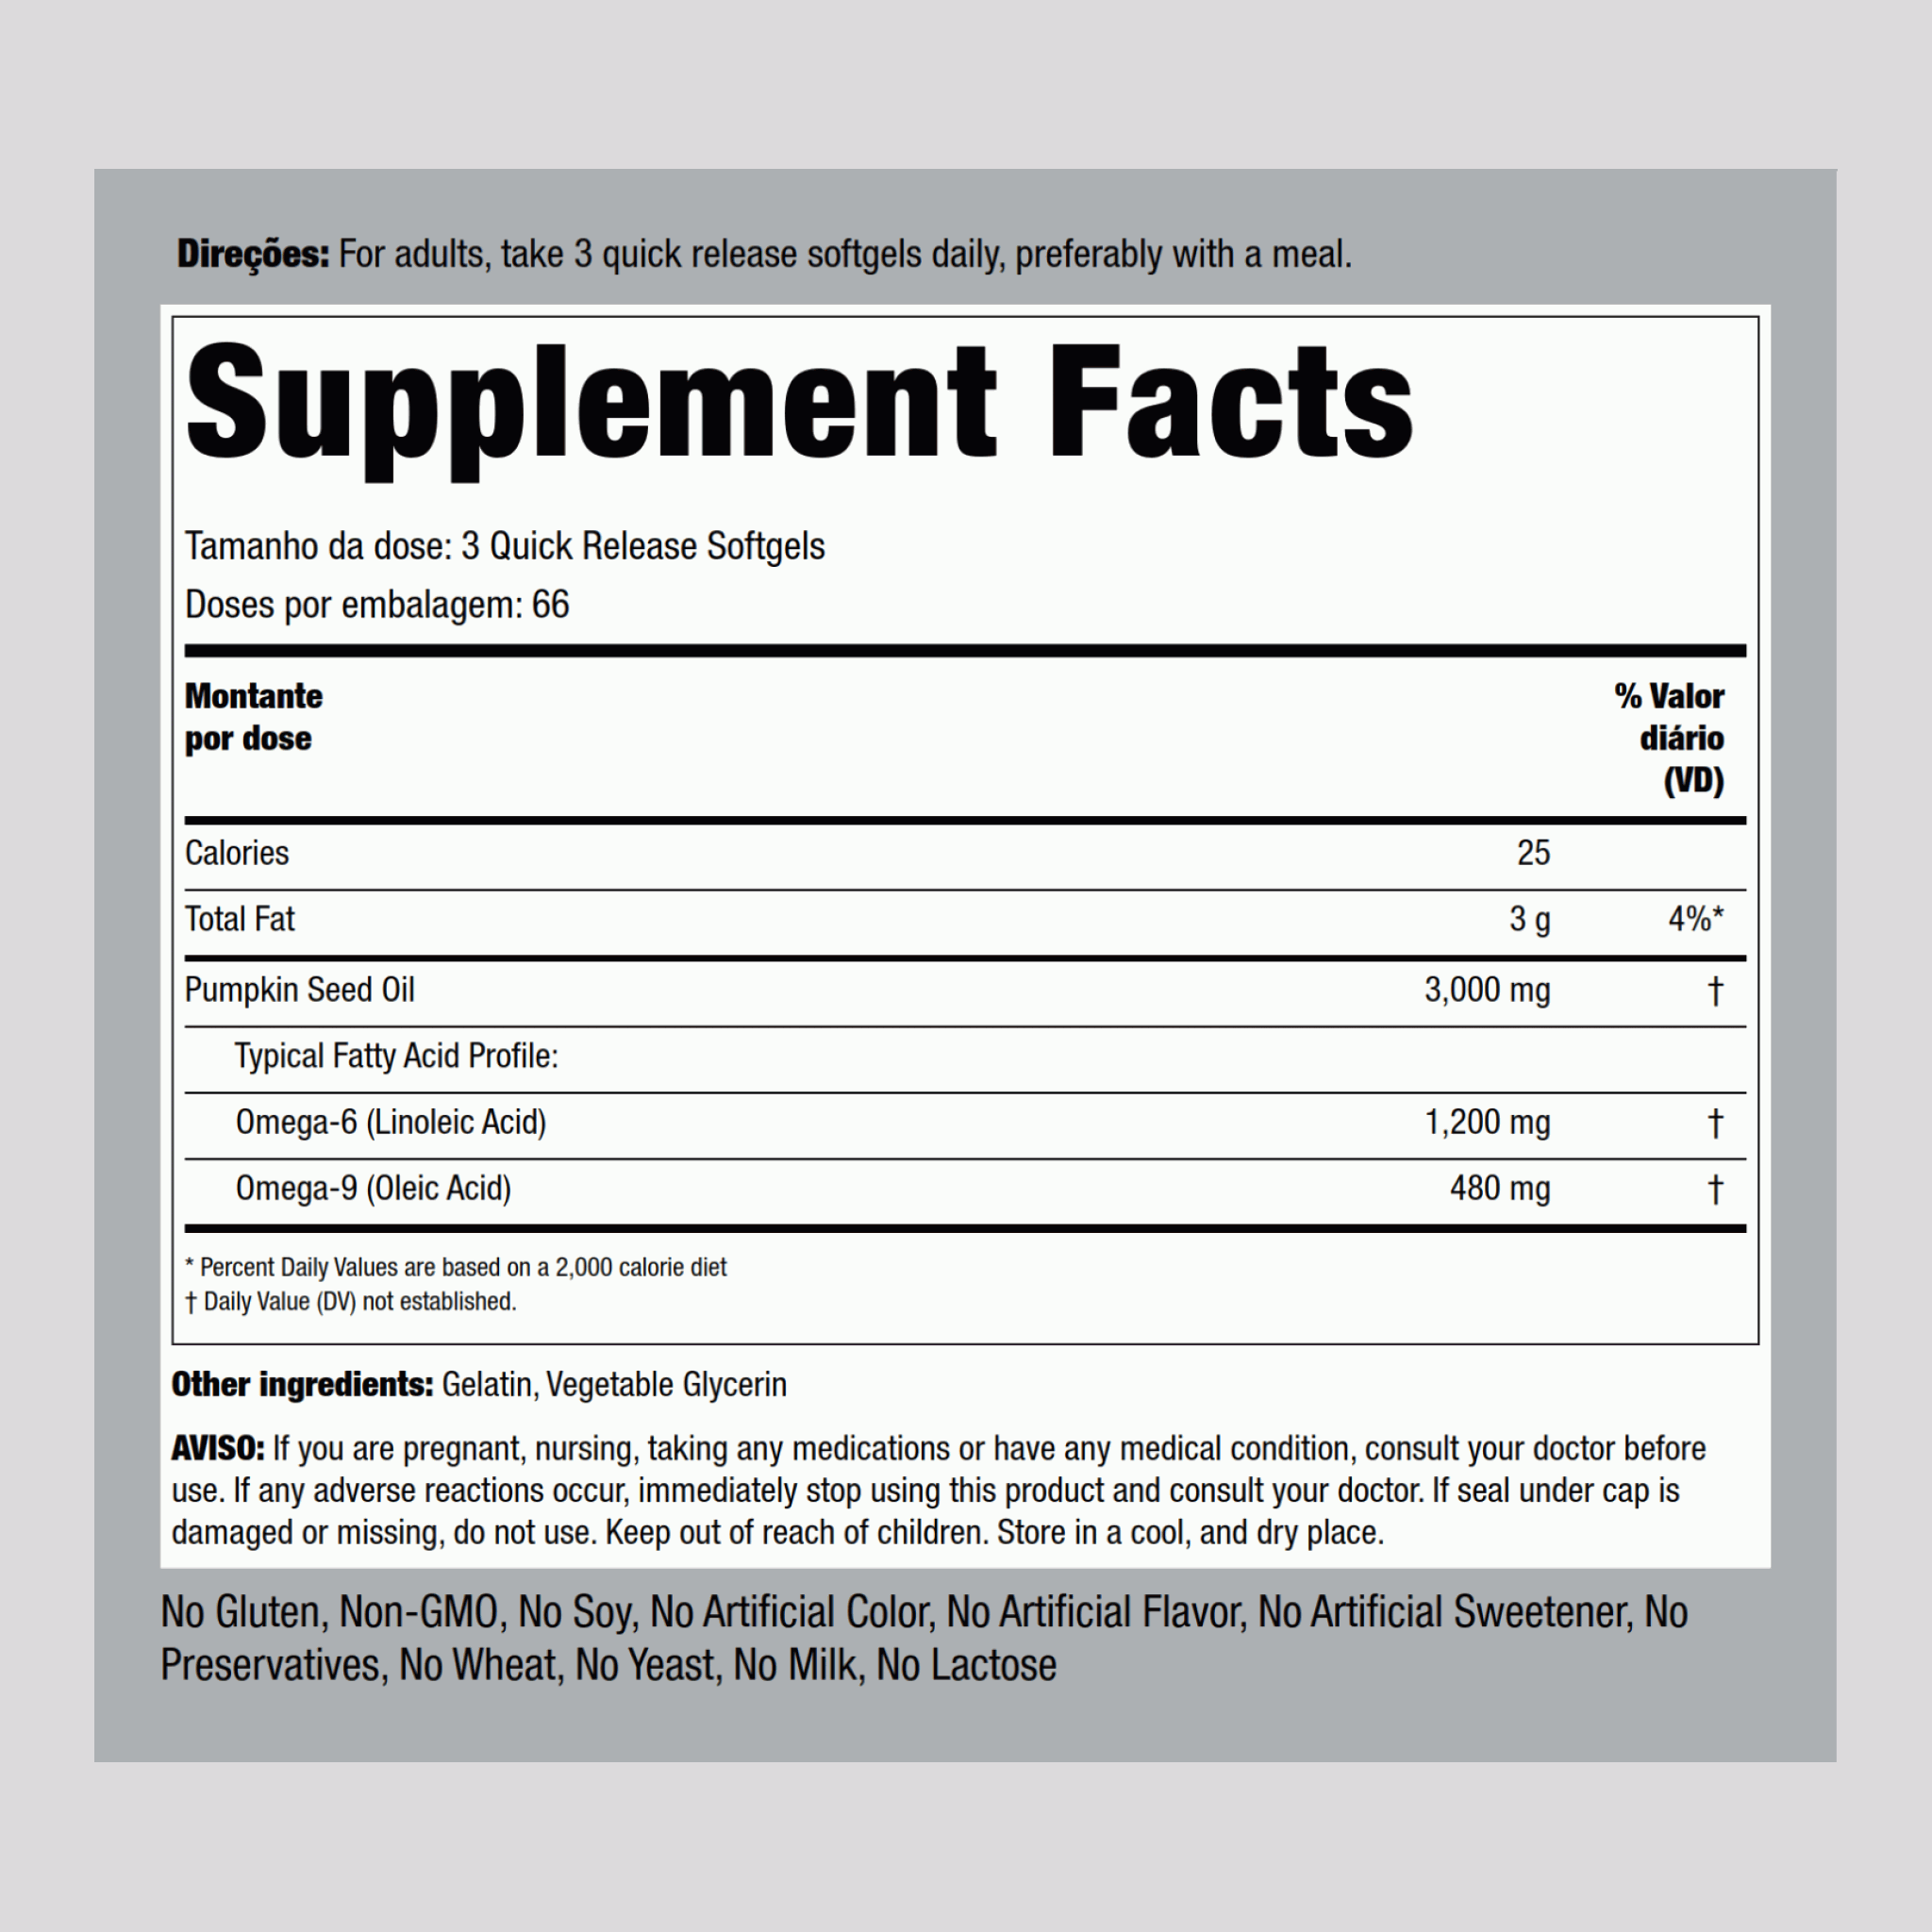 Pumpkin Seed Oil, 3000 mg (per serving), 200 Quick Release Softgels, 2  Bottles